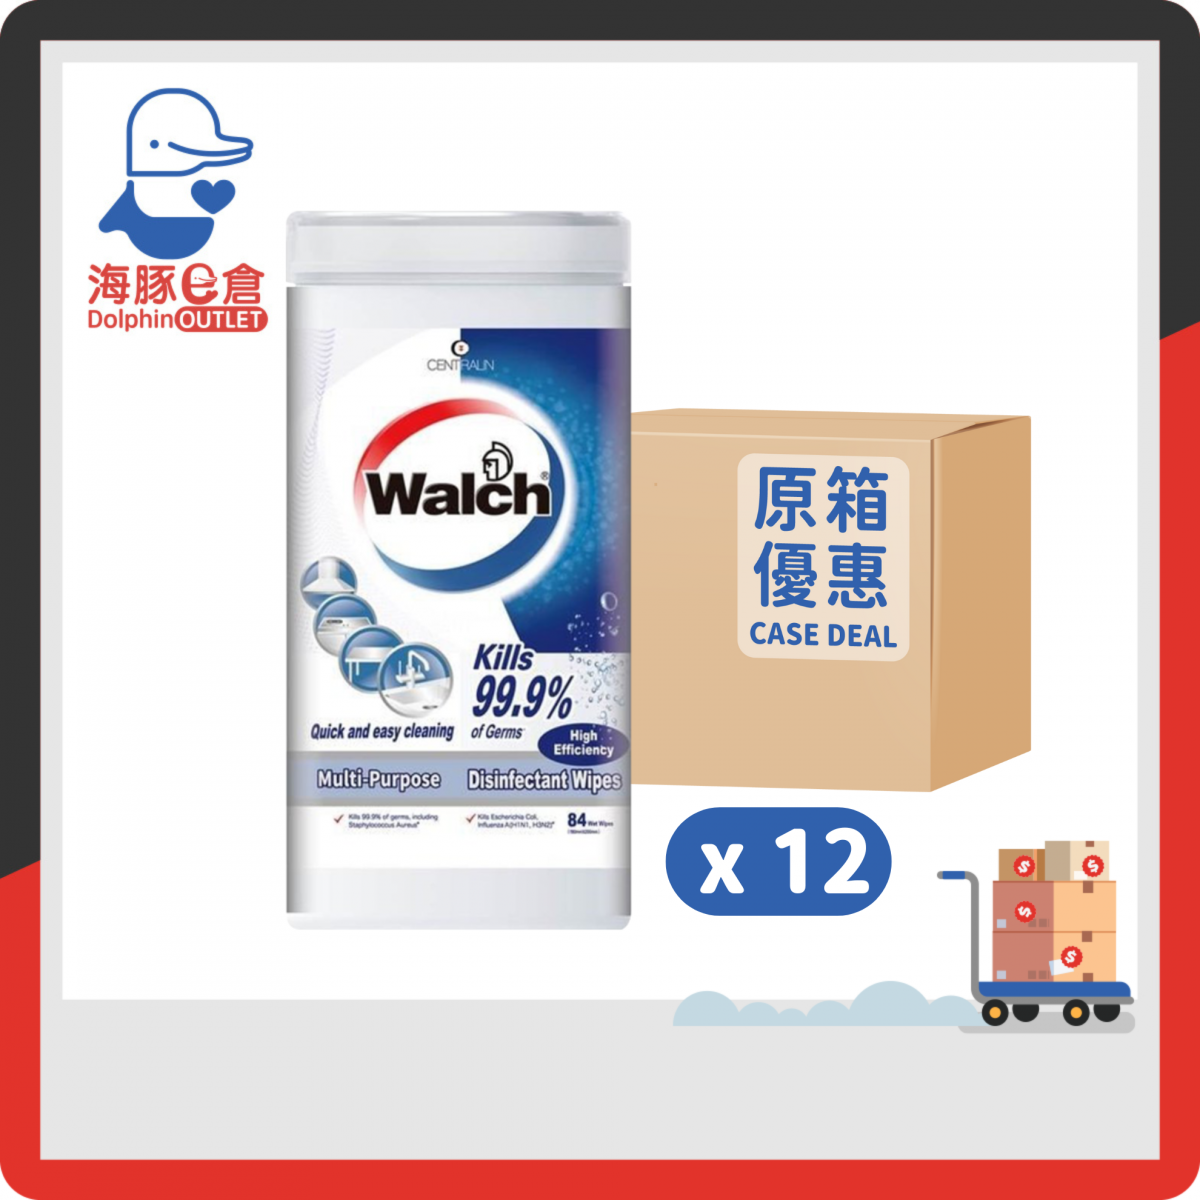 【Full Case】Multi-purpose disinfectant wipes, high-efficiency decontamination type 84 pieces